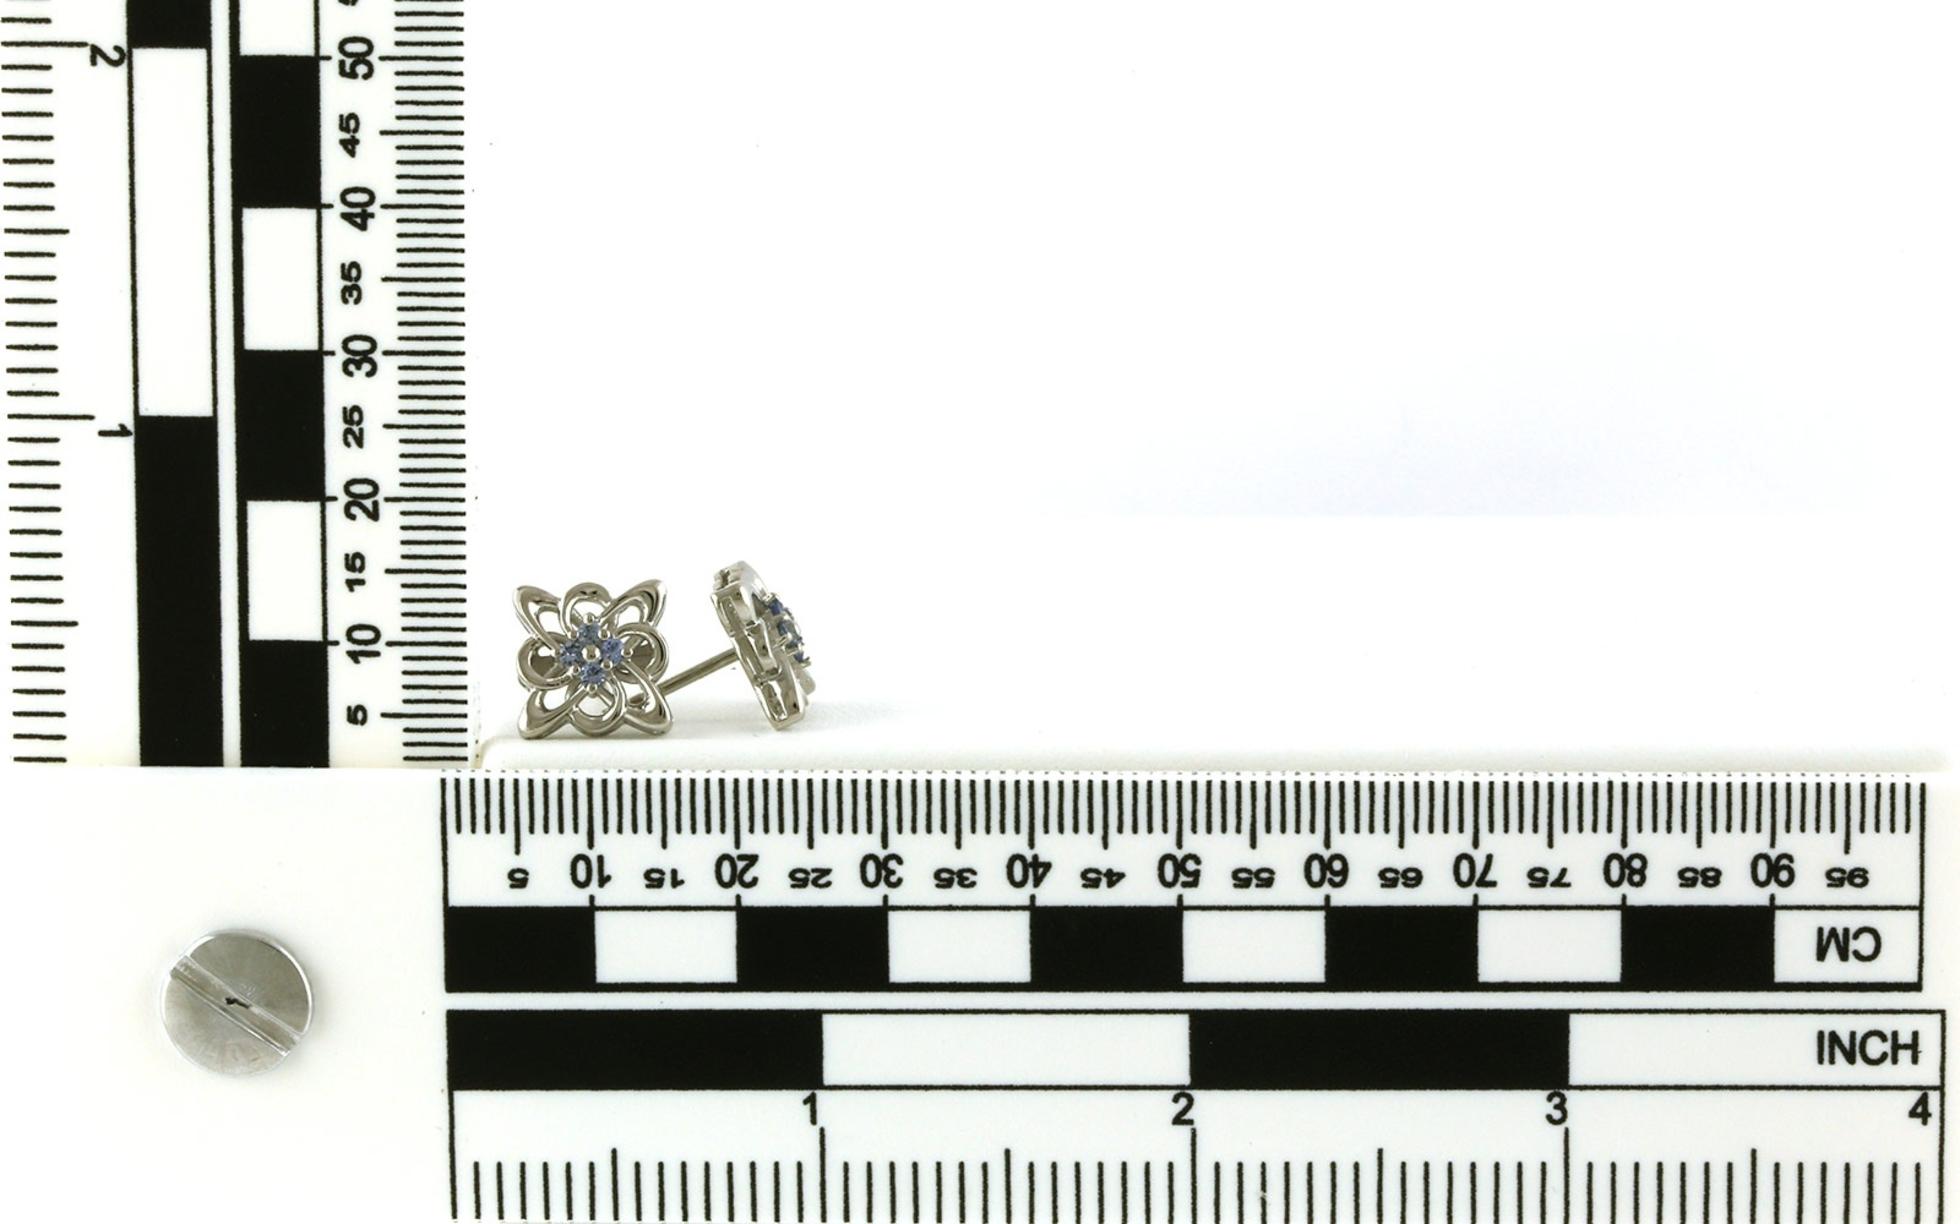 4-Stone Cluster Swirl Flower Montana Yogo Sapphire Stud Earrings in Sterling Silver (0.24cts TWT) scale